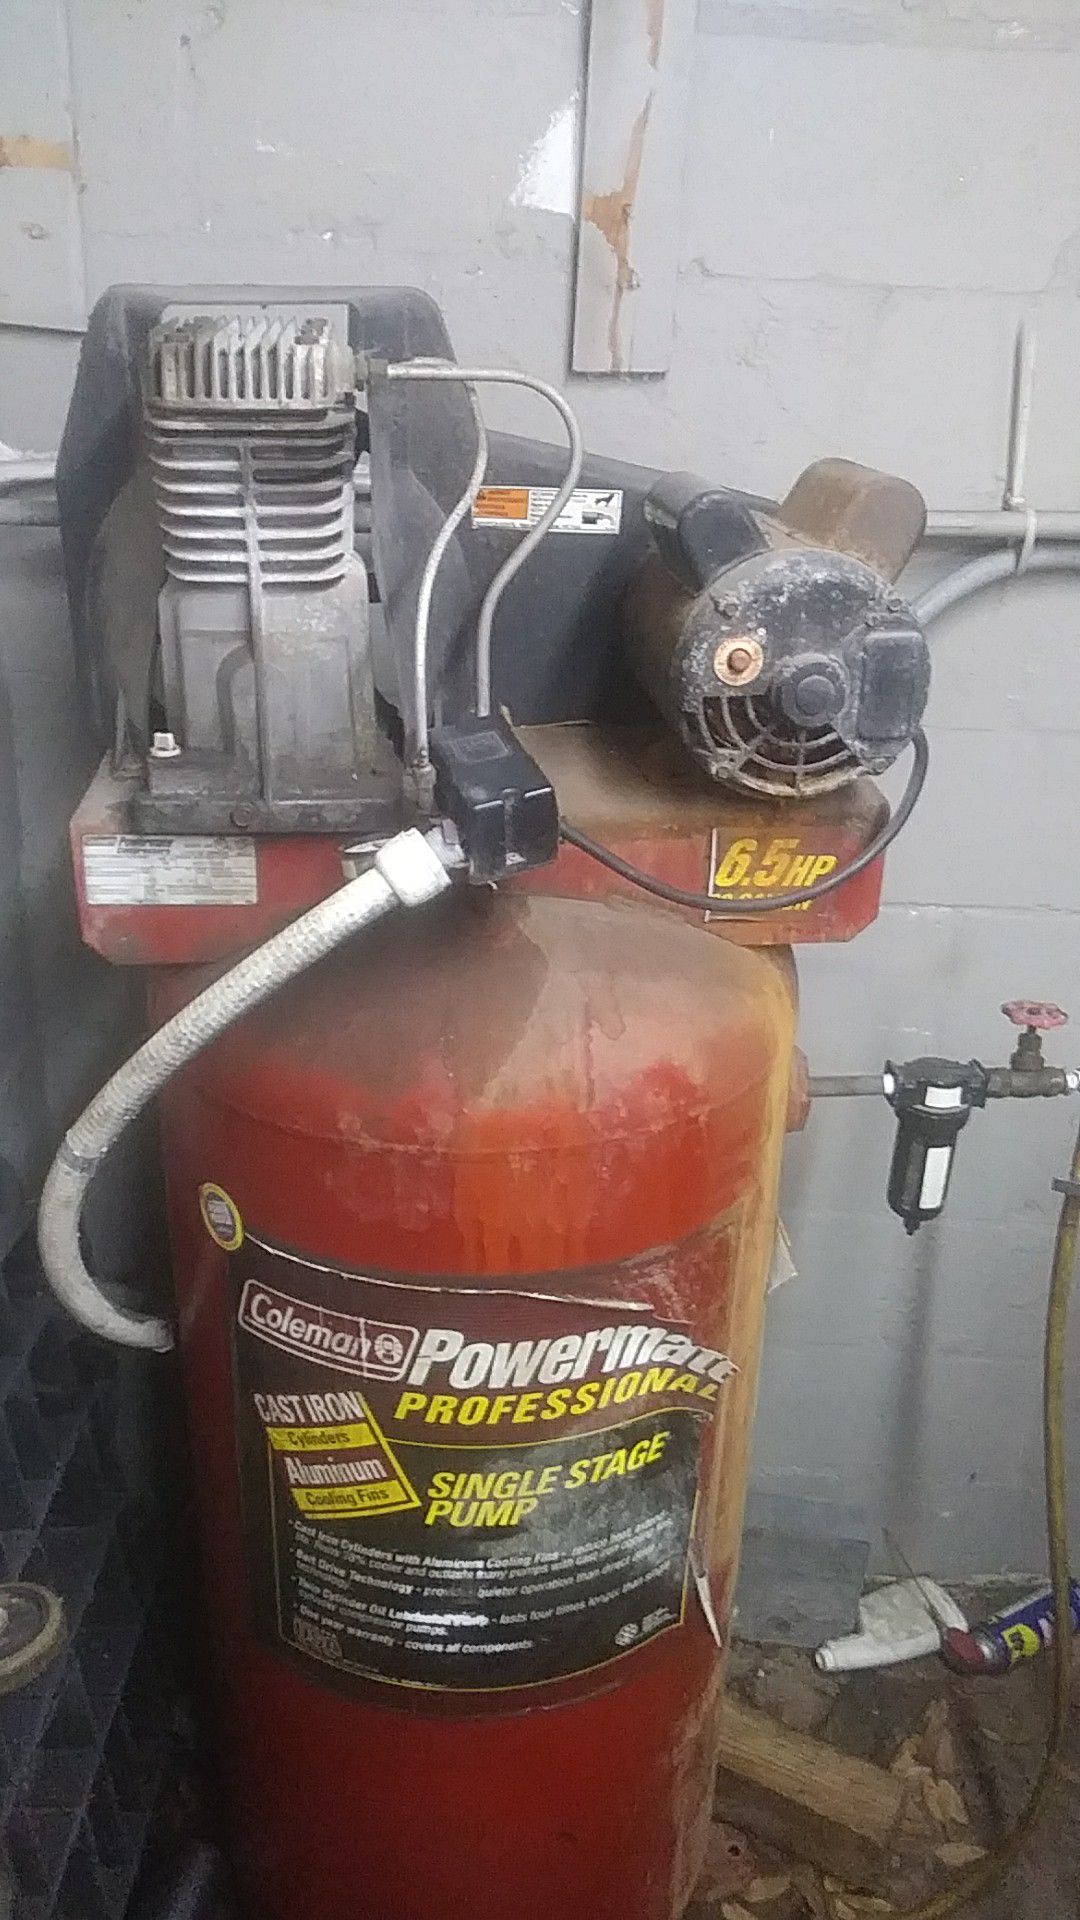 220 shop compressor works great quiet pumps up fast